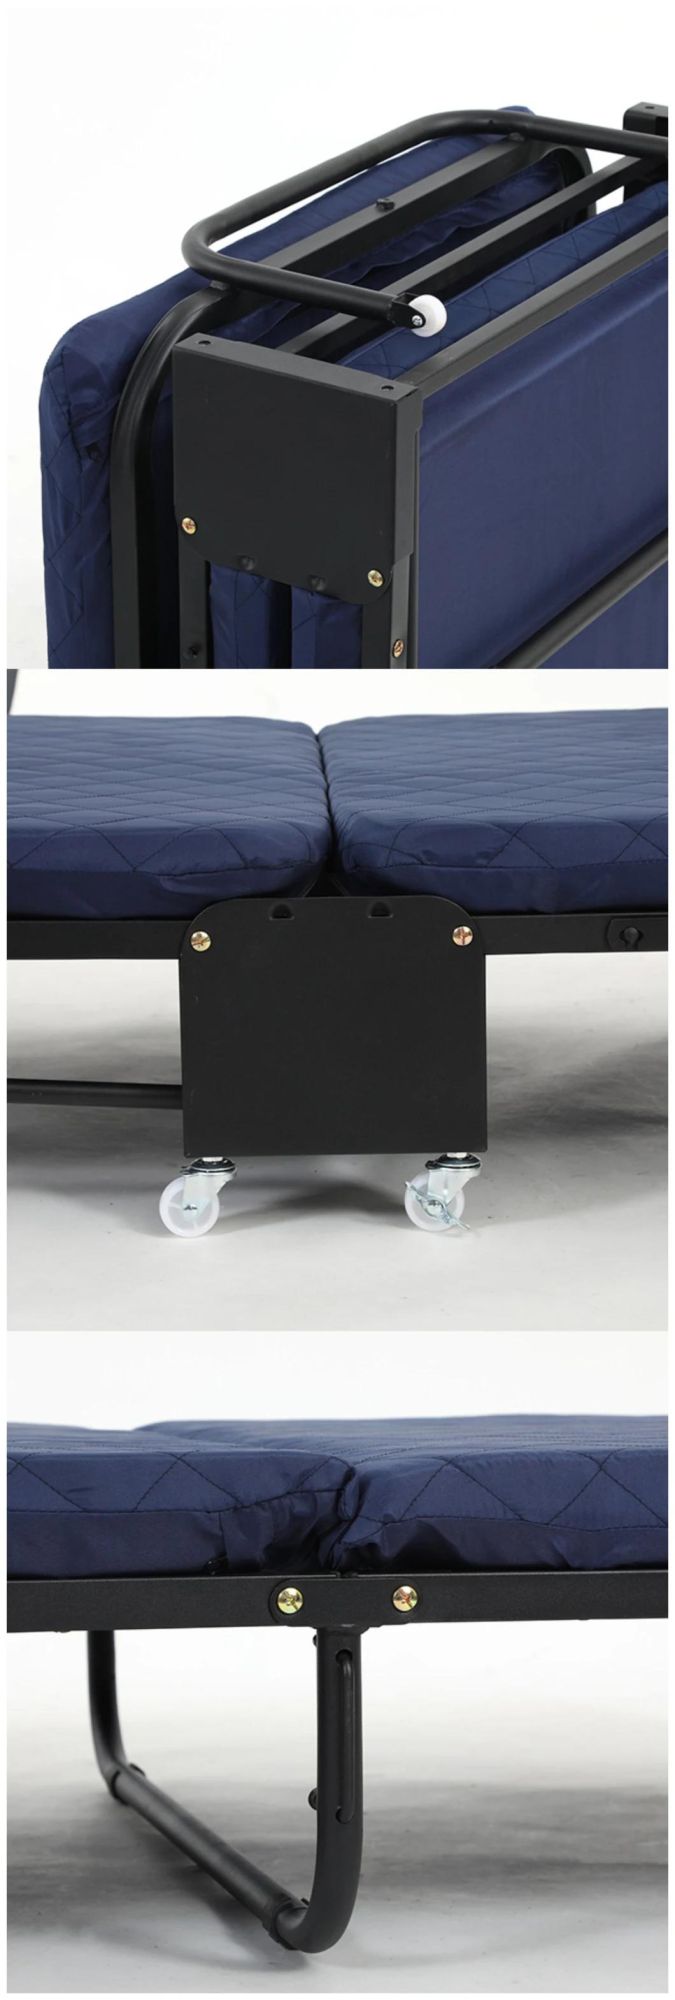 3/4 Bedding Metal Folding Sofa Furniture Bed